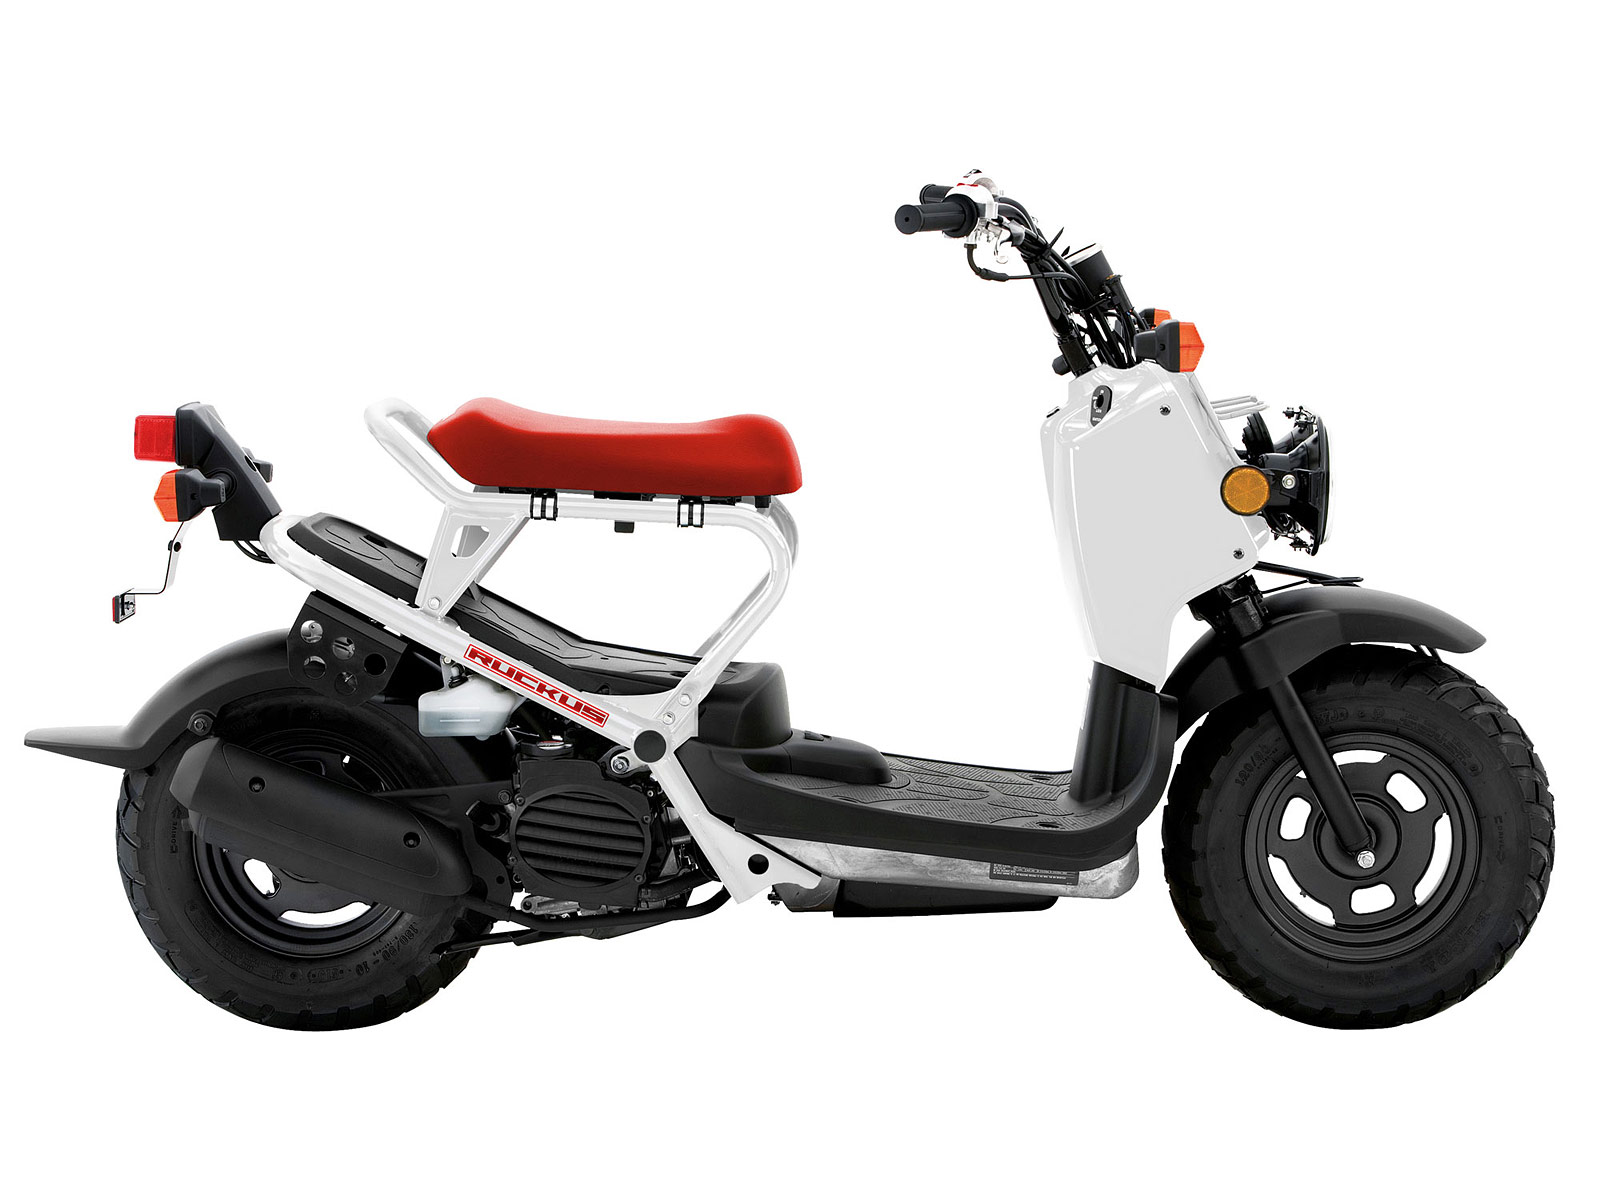 Honda ruckus scooter or moped #5